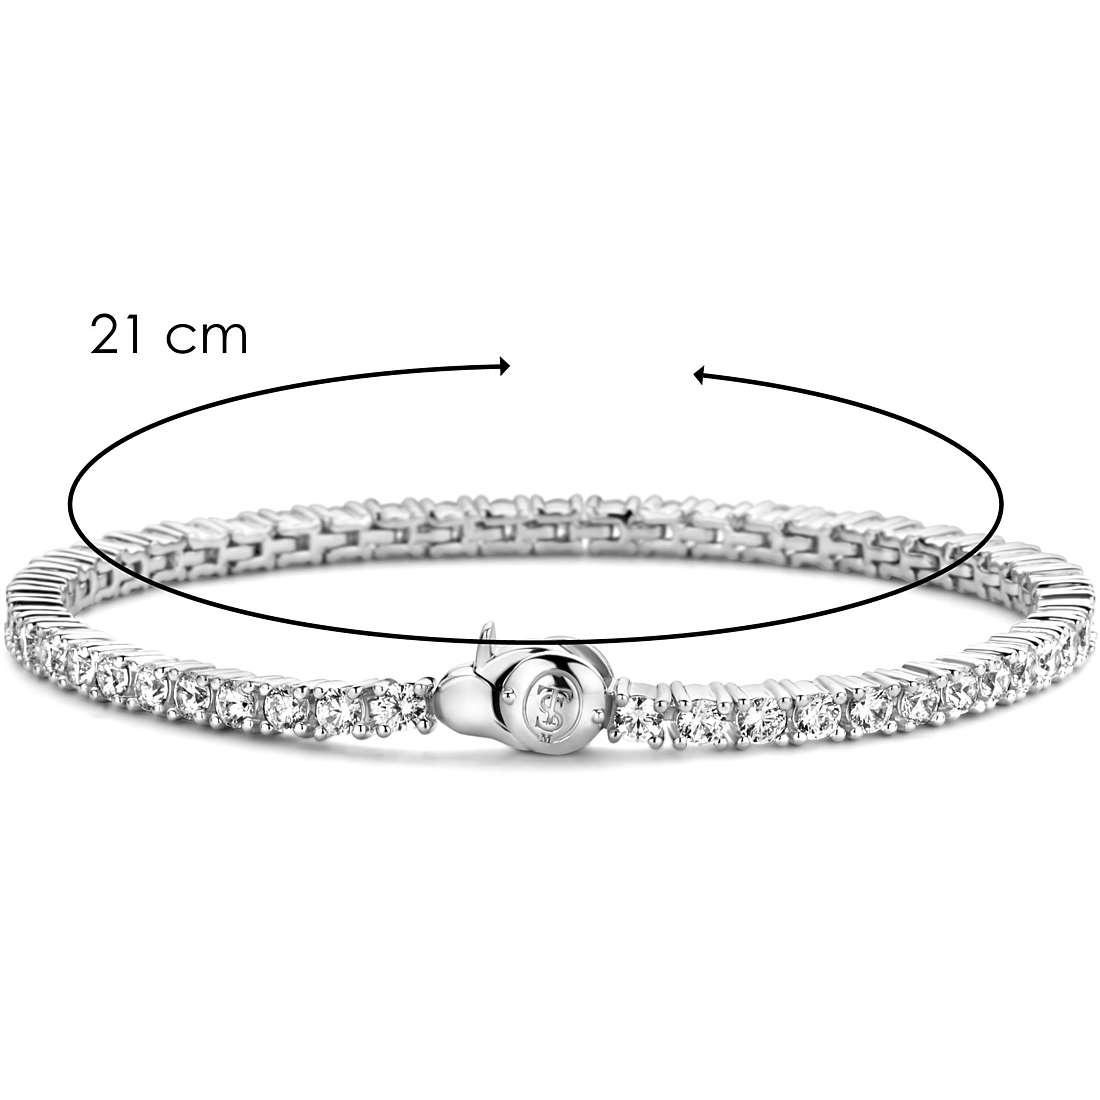 TI SENTO MILANO bracelet woman Bracelet with 925 Silver Tennis jewel 2951ZI